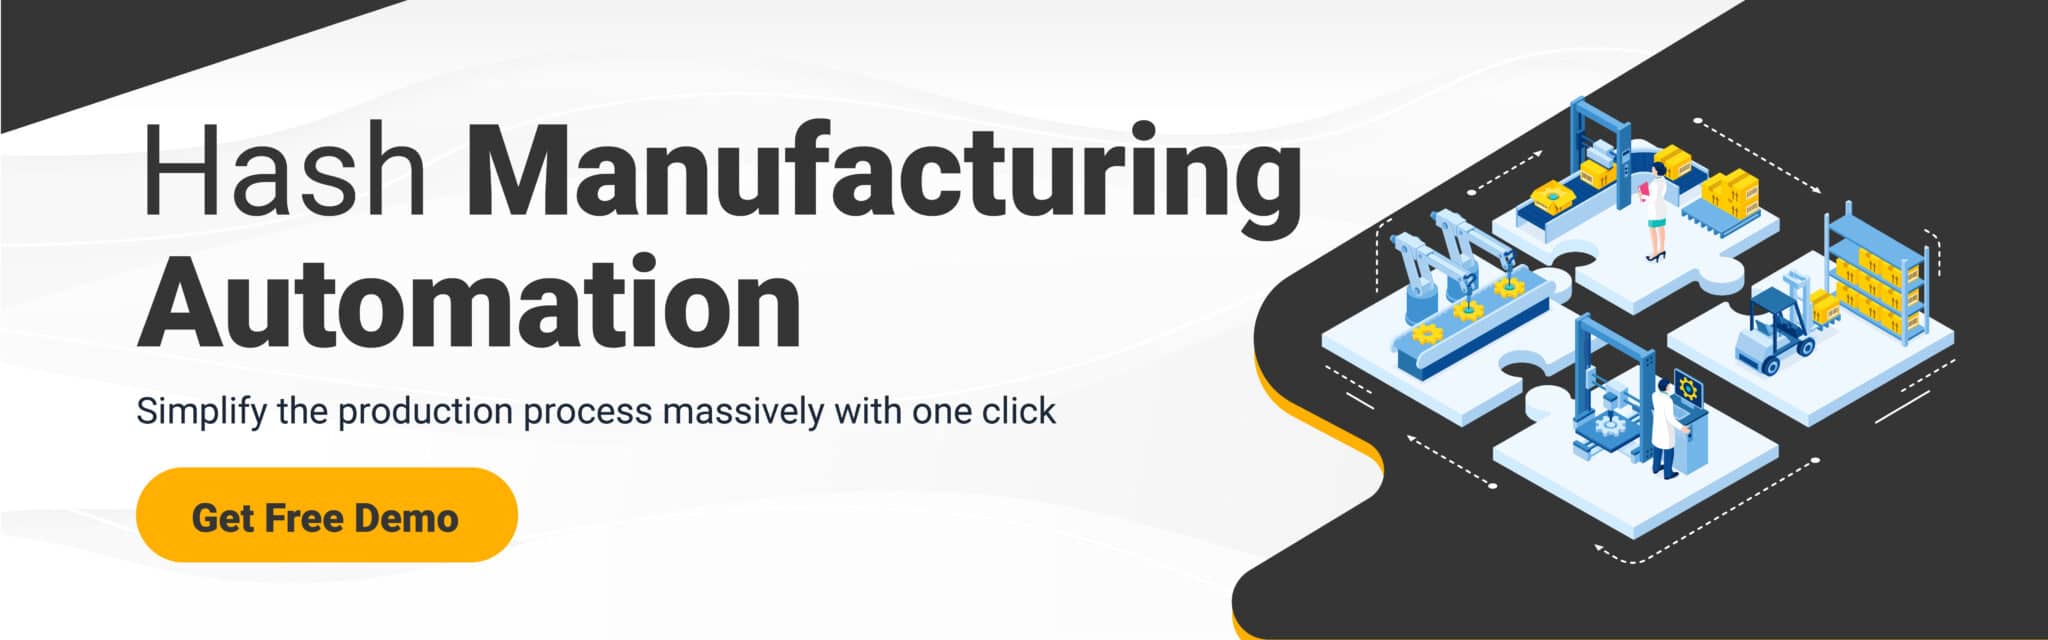 manufacturing companies (https://www.hashmicro.com/hash-manufacturing-software/?)